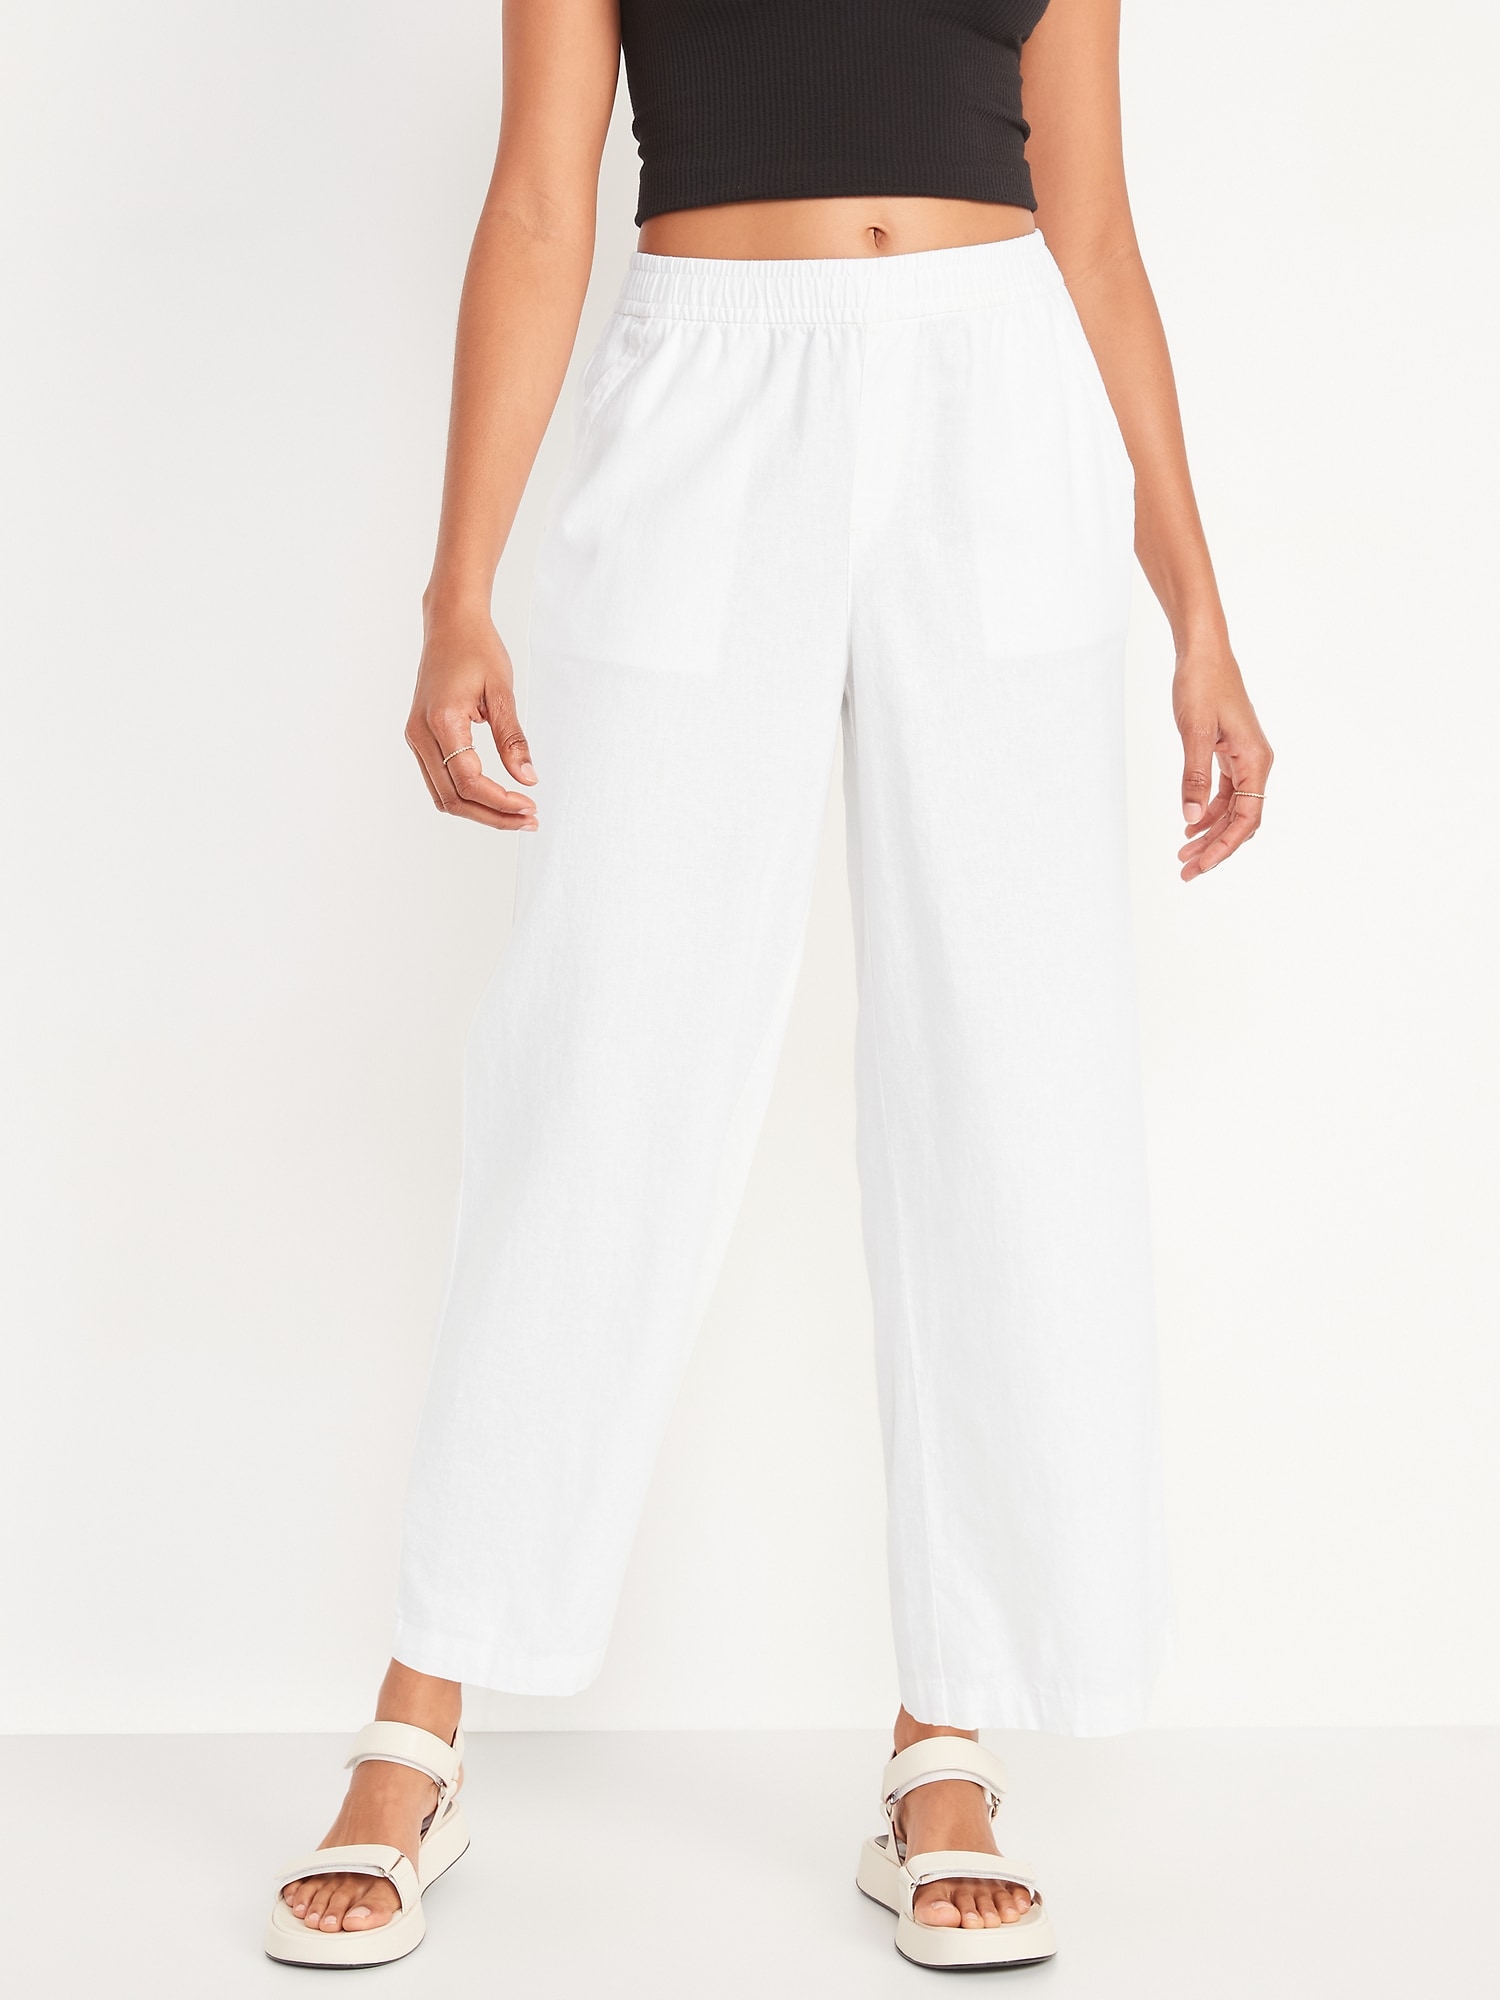 Lady Loose Wide Leg Pants Trousers Denim Casual Tie-dye High Waist White  Summer | eBay